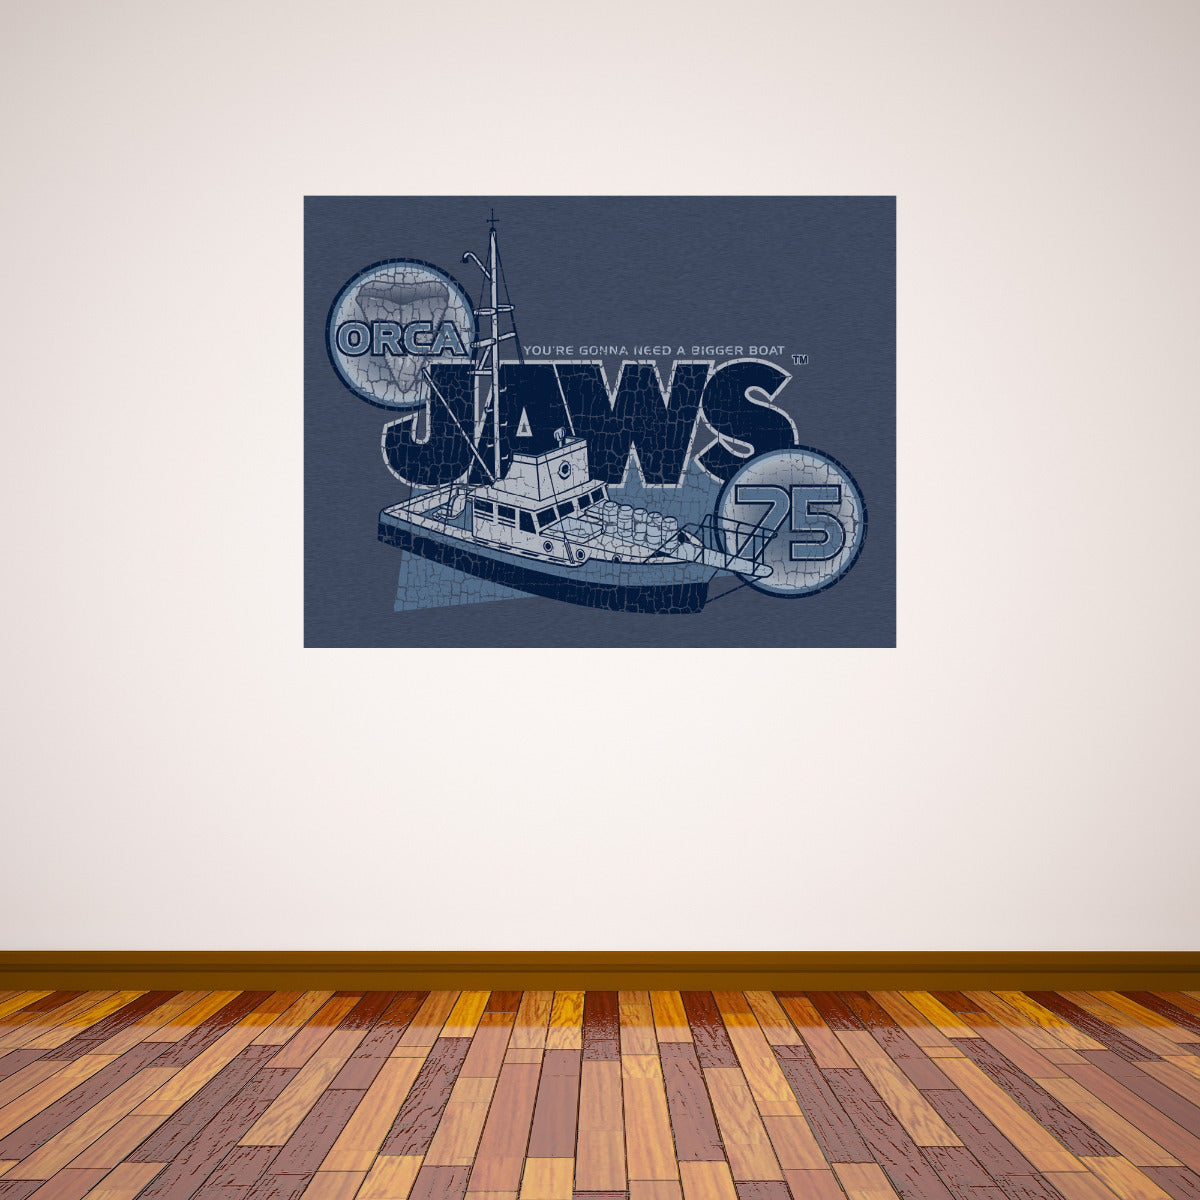 Jaws Wall Sticker Bigger Boat Distress Graphic